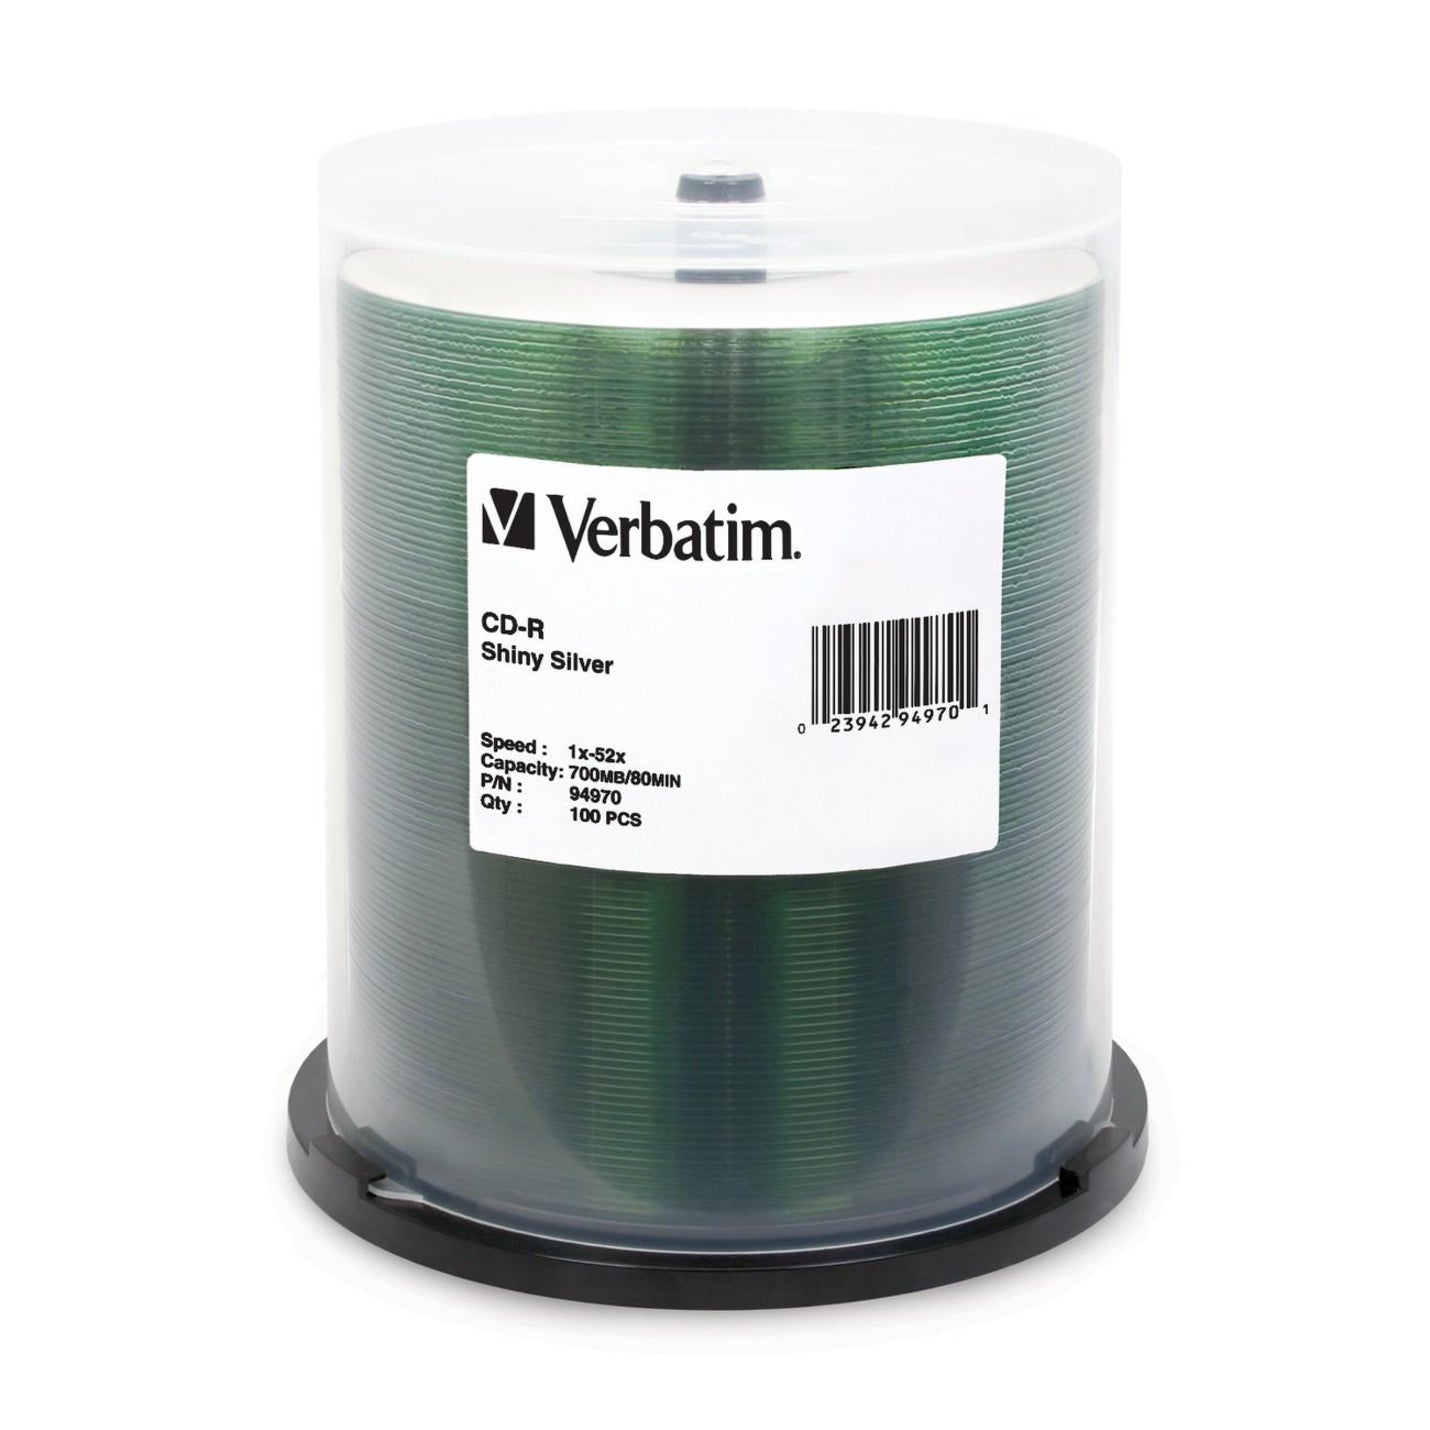 Verbatim 94970 CD-R 80MIN 700MB 52x Shiny Silver, Printable, Lifetime Warranty